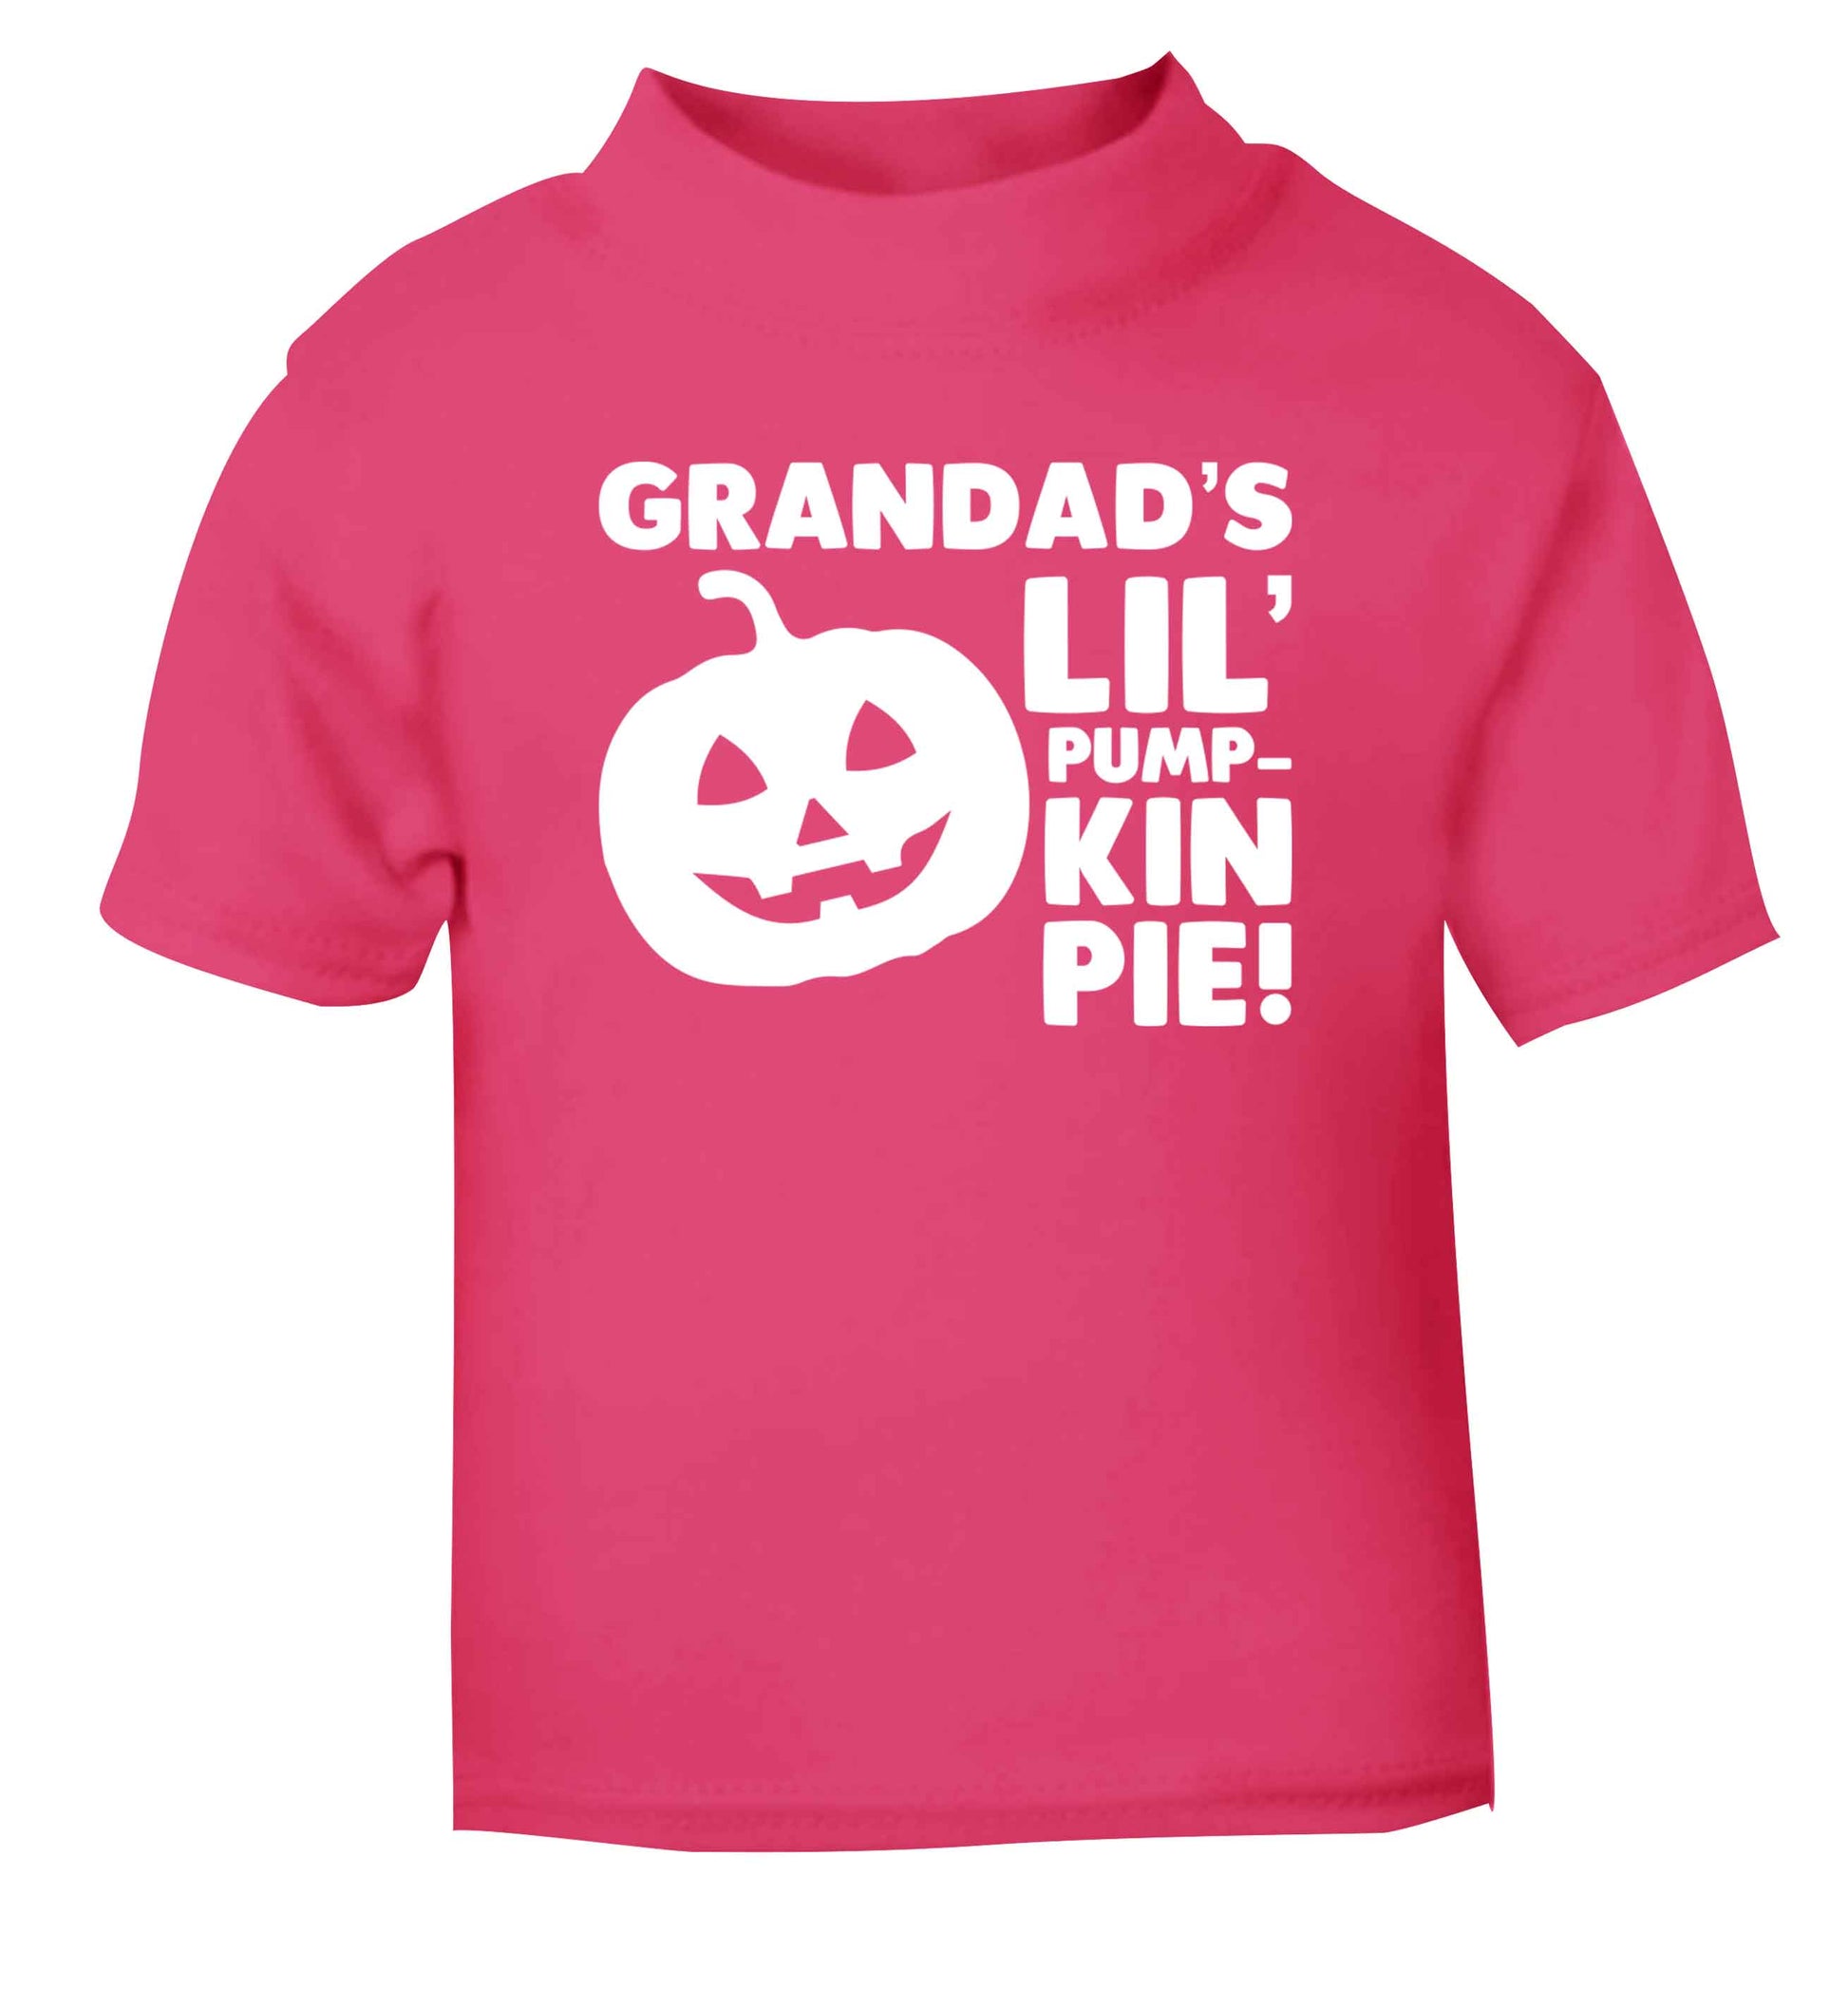 Grandad's lil' pumpkin pie pink baby toddler Tshirt 2 Years